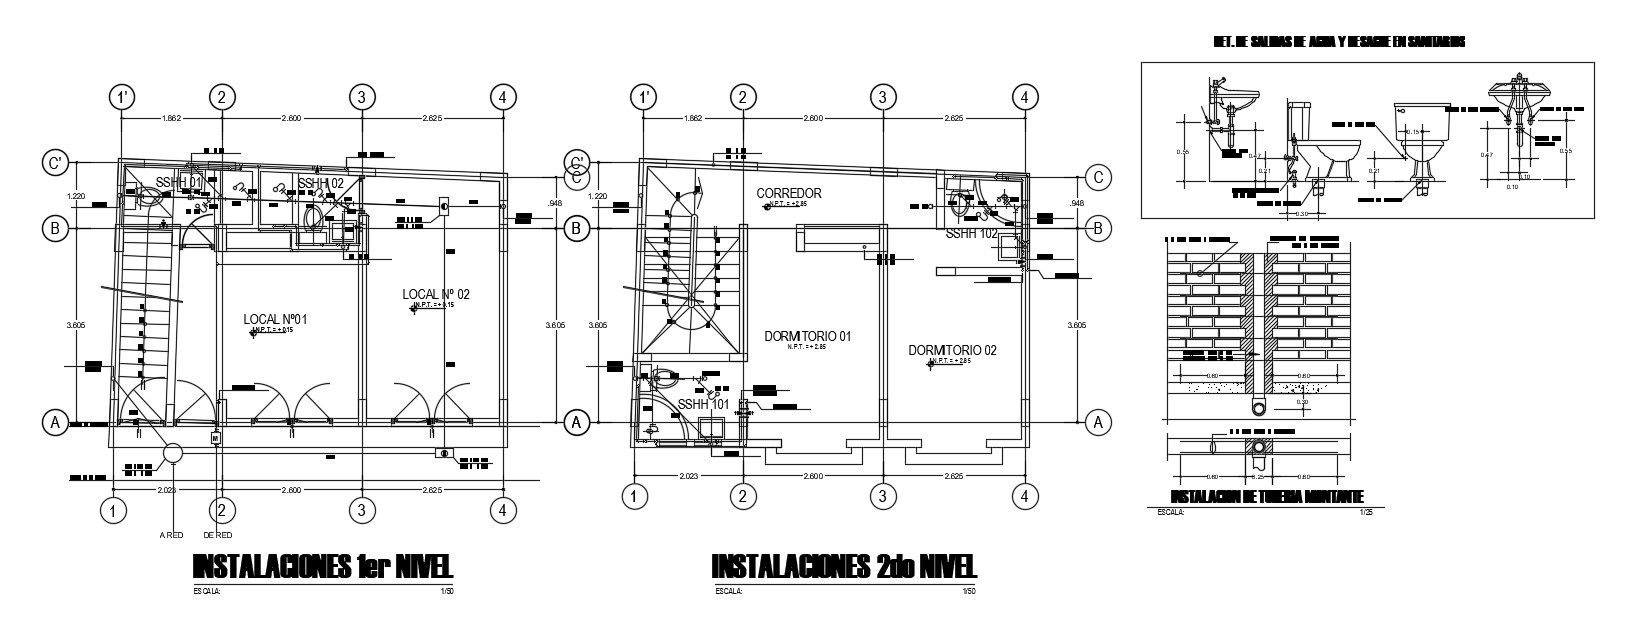 Duplex House Plans In AutoCAD File - Cadbull